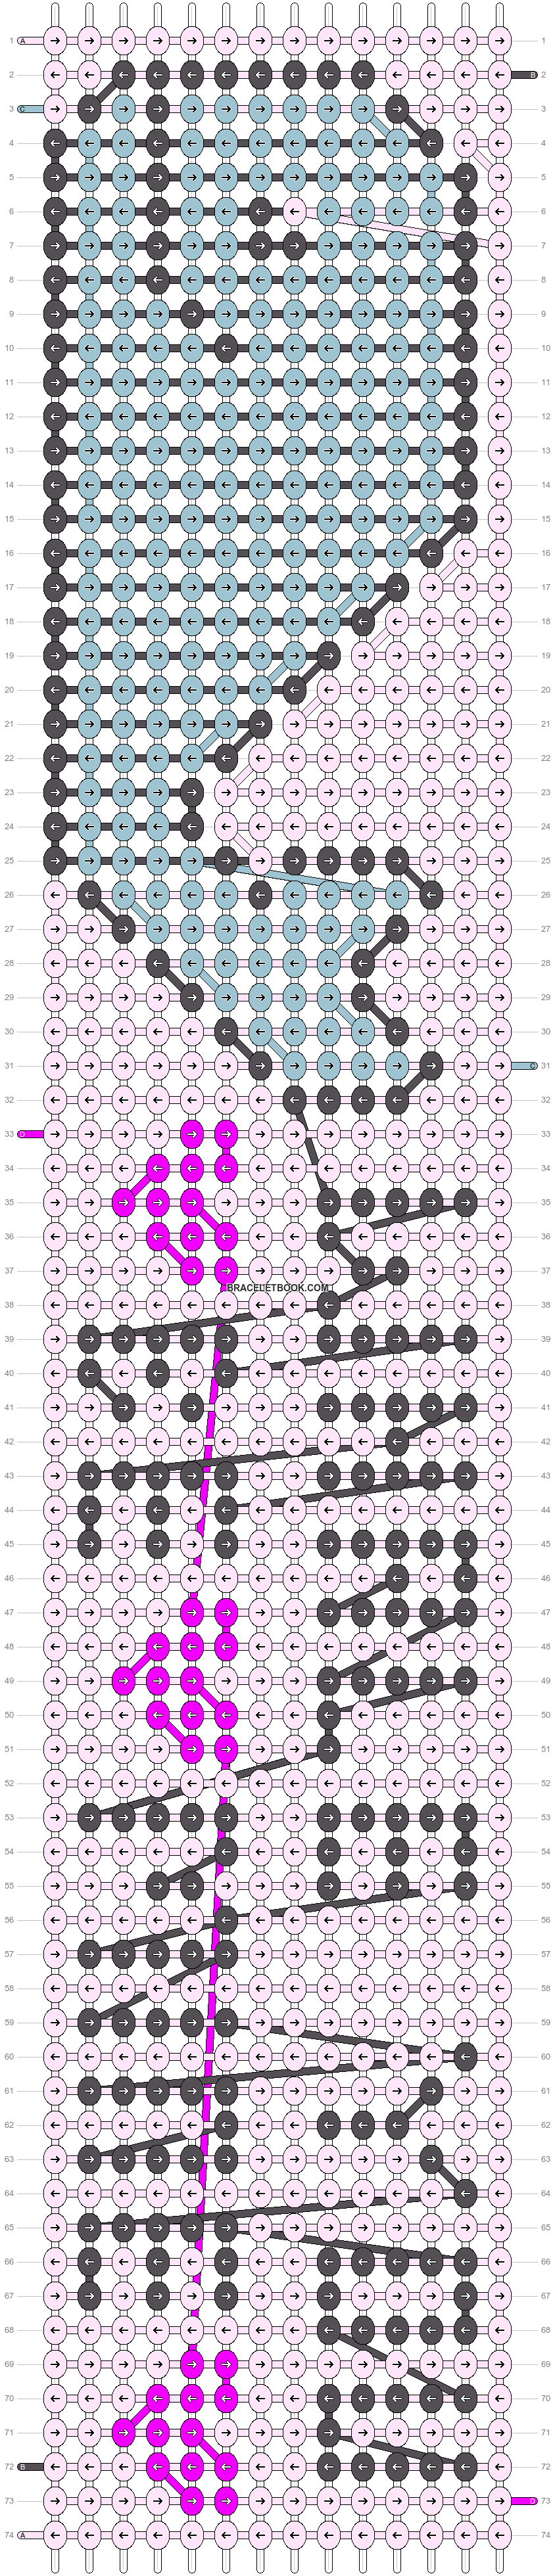 Alpha pattern #9175 variation #11456 pattern